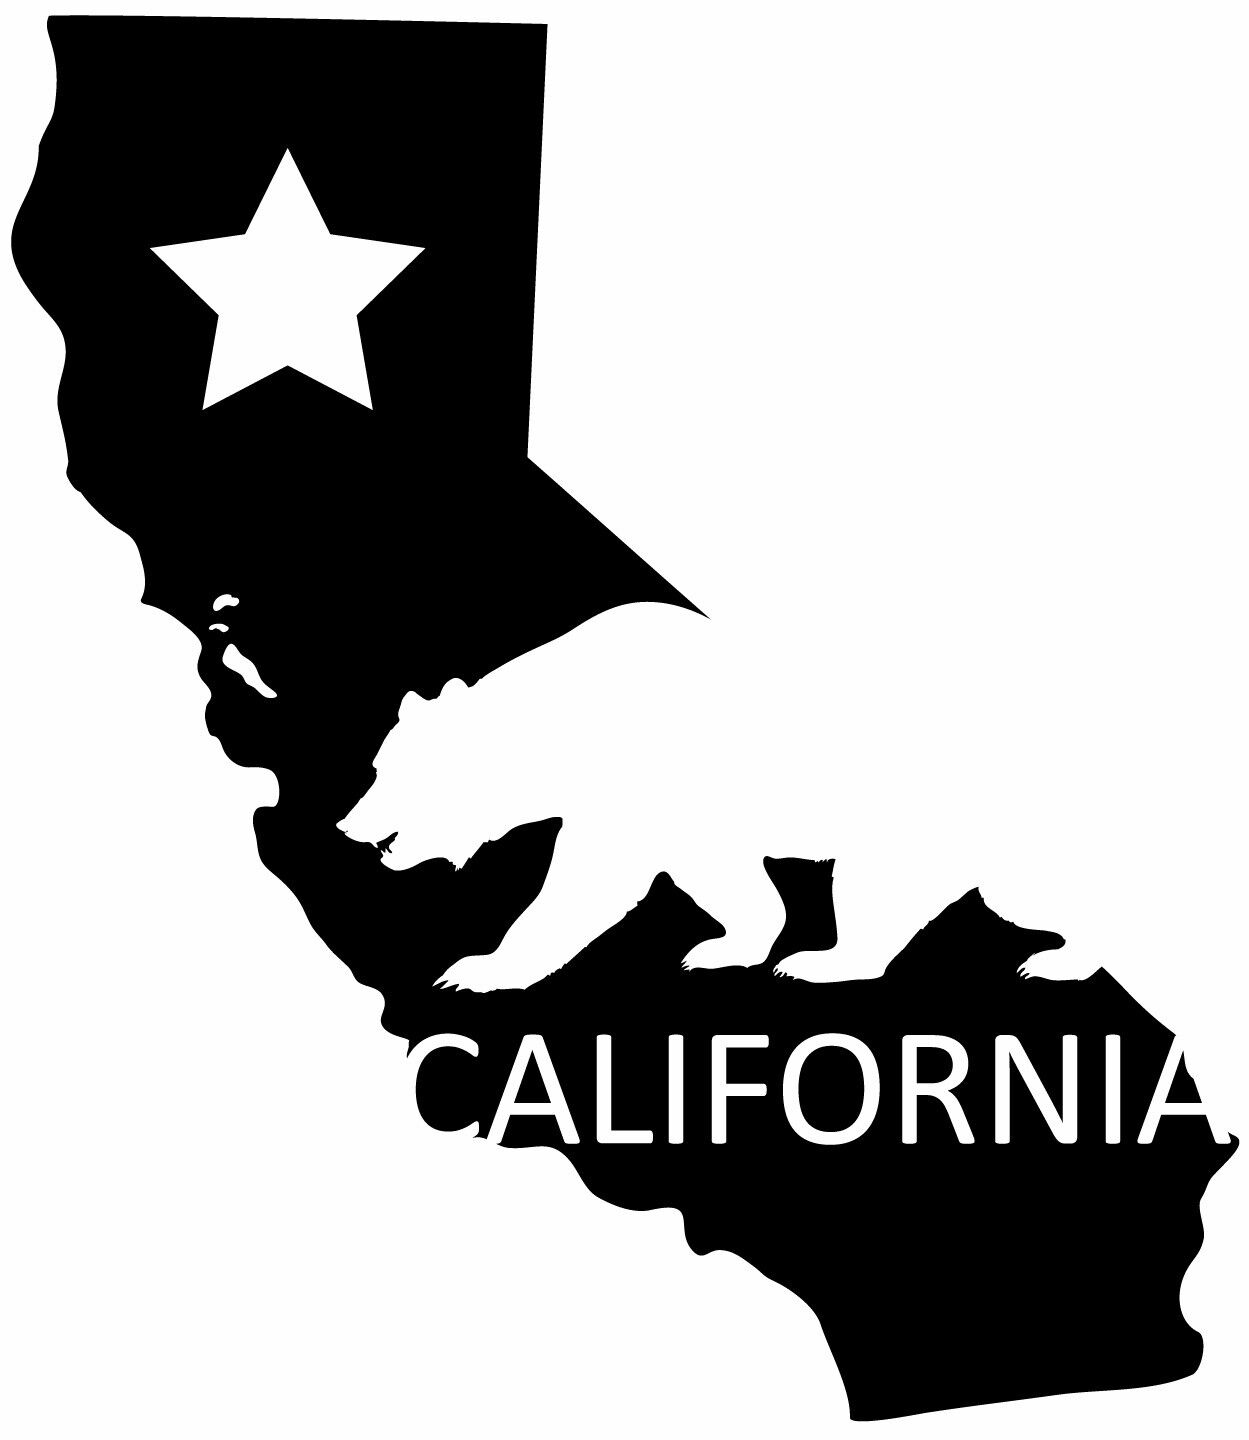 This is a California bear, flag, state, sticker or decal vinyl cut cali love.